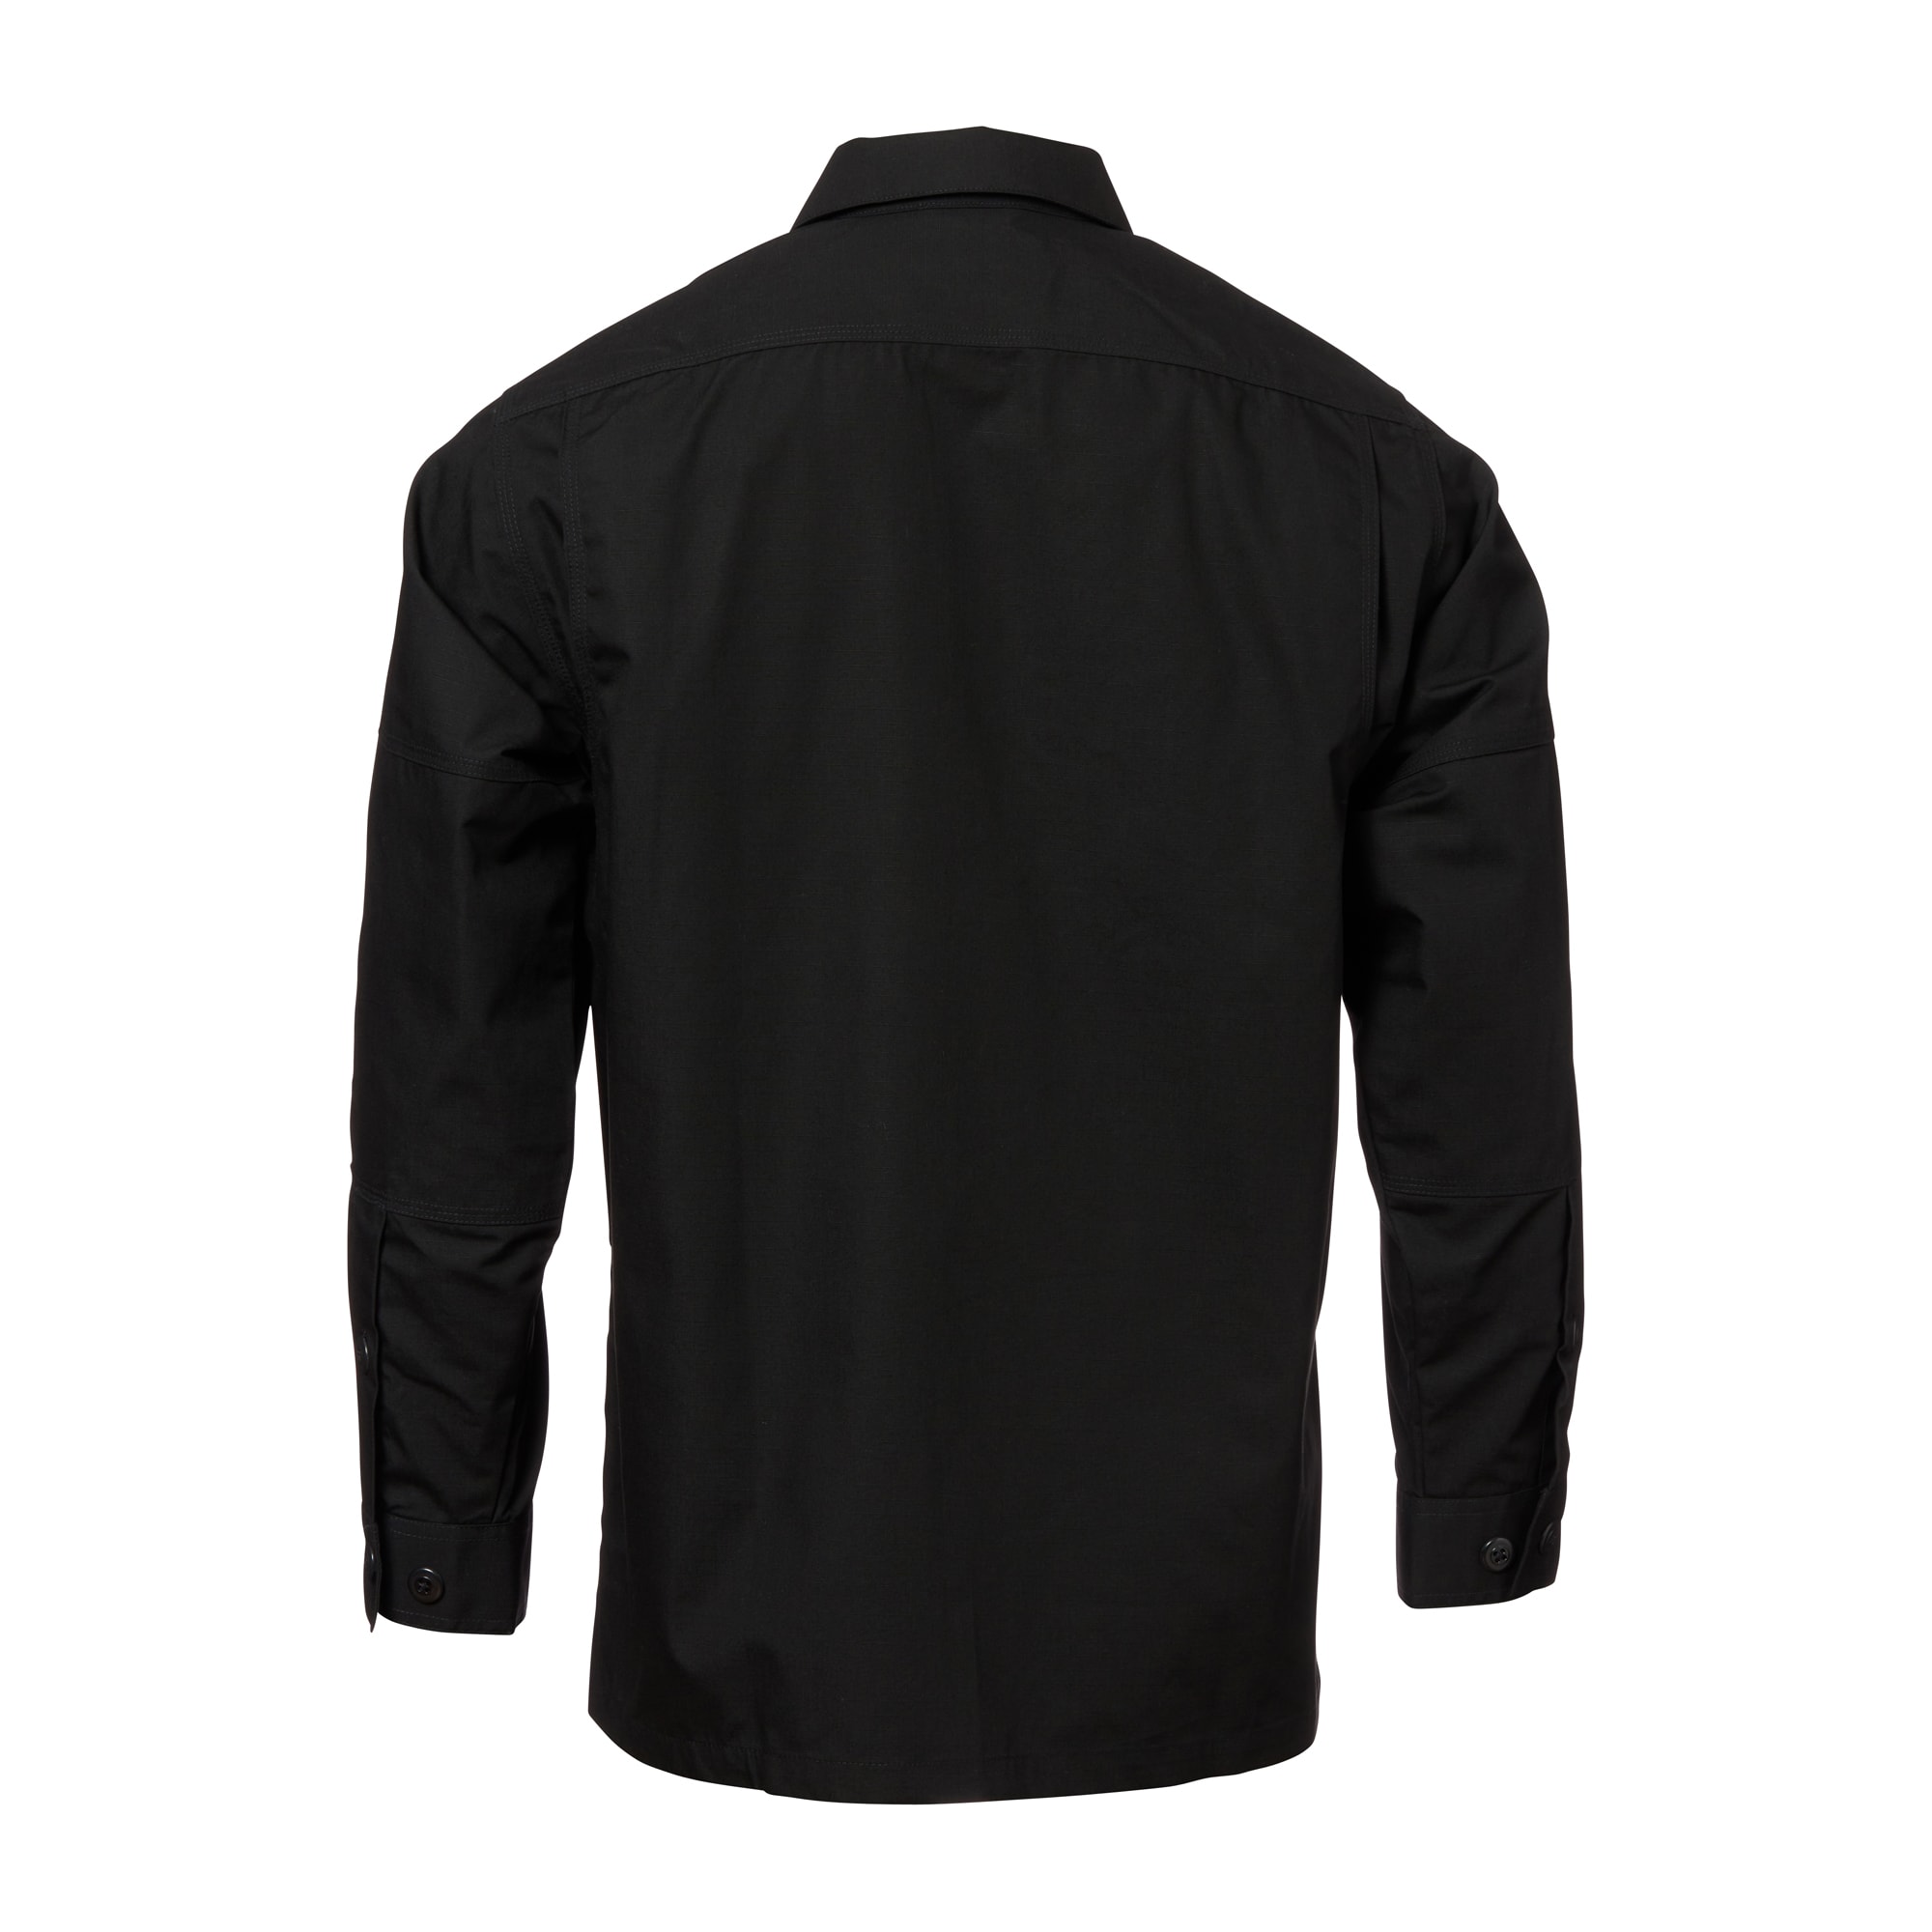 Purchase the 5.11 TDU Shirt black by ASMC